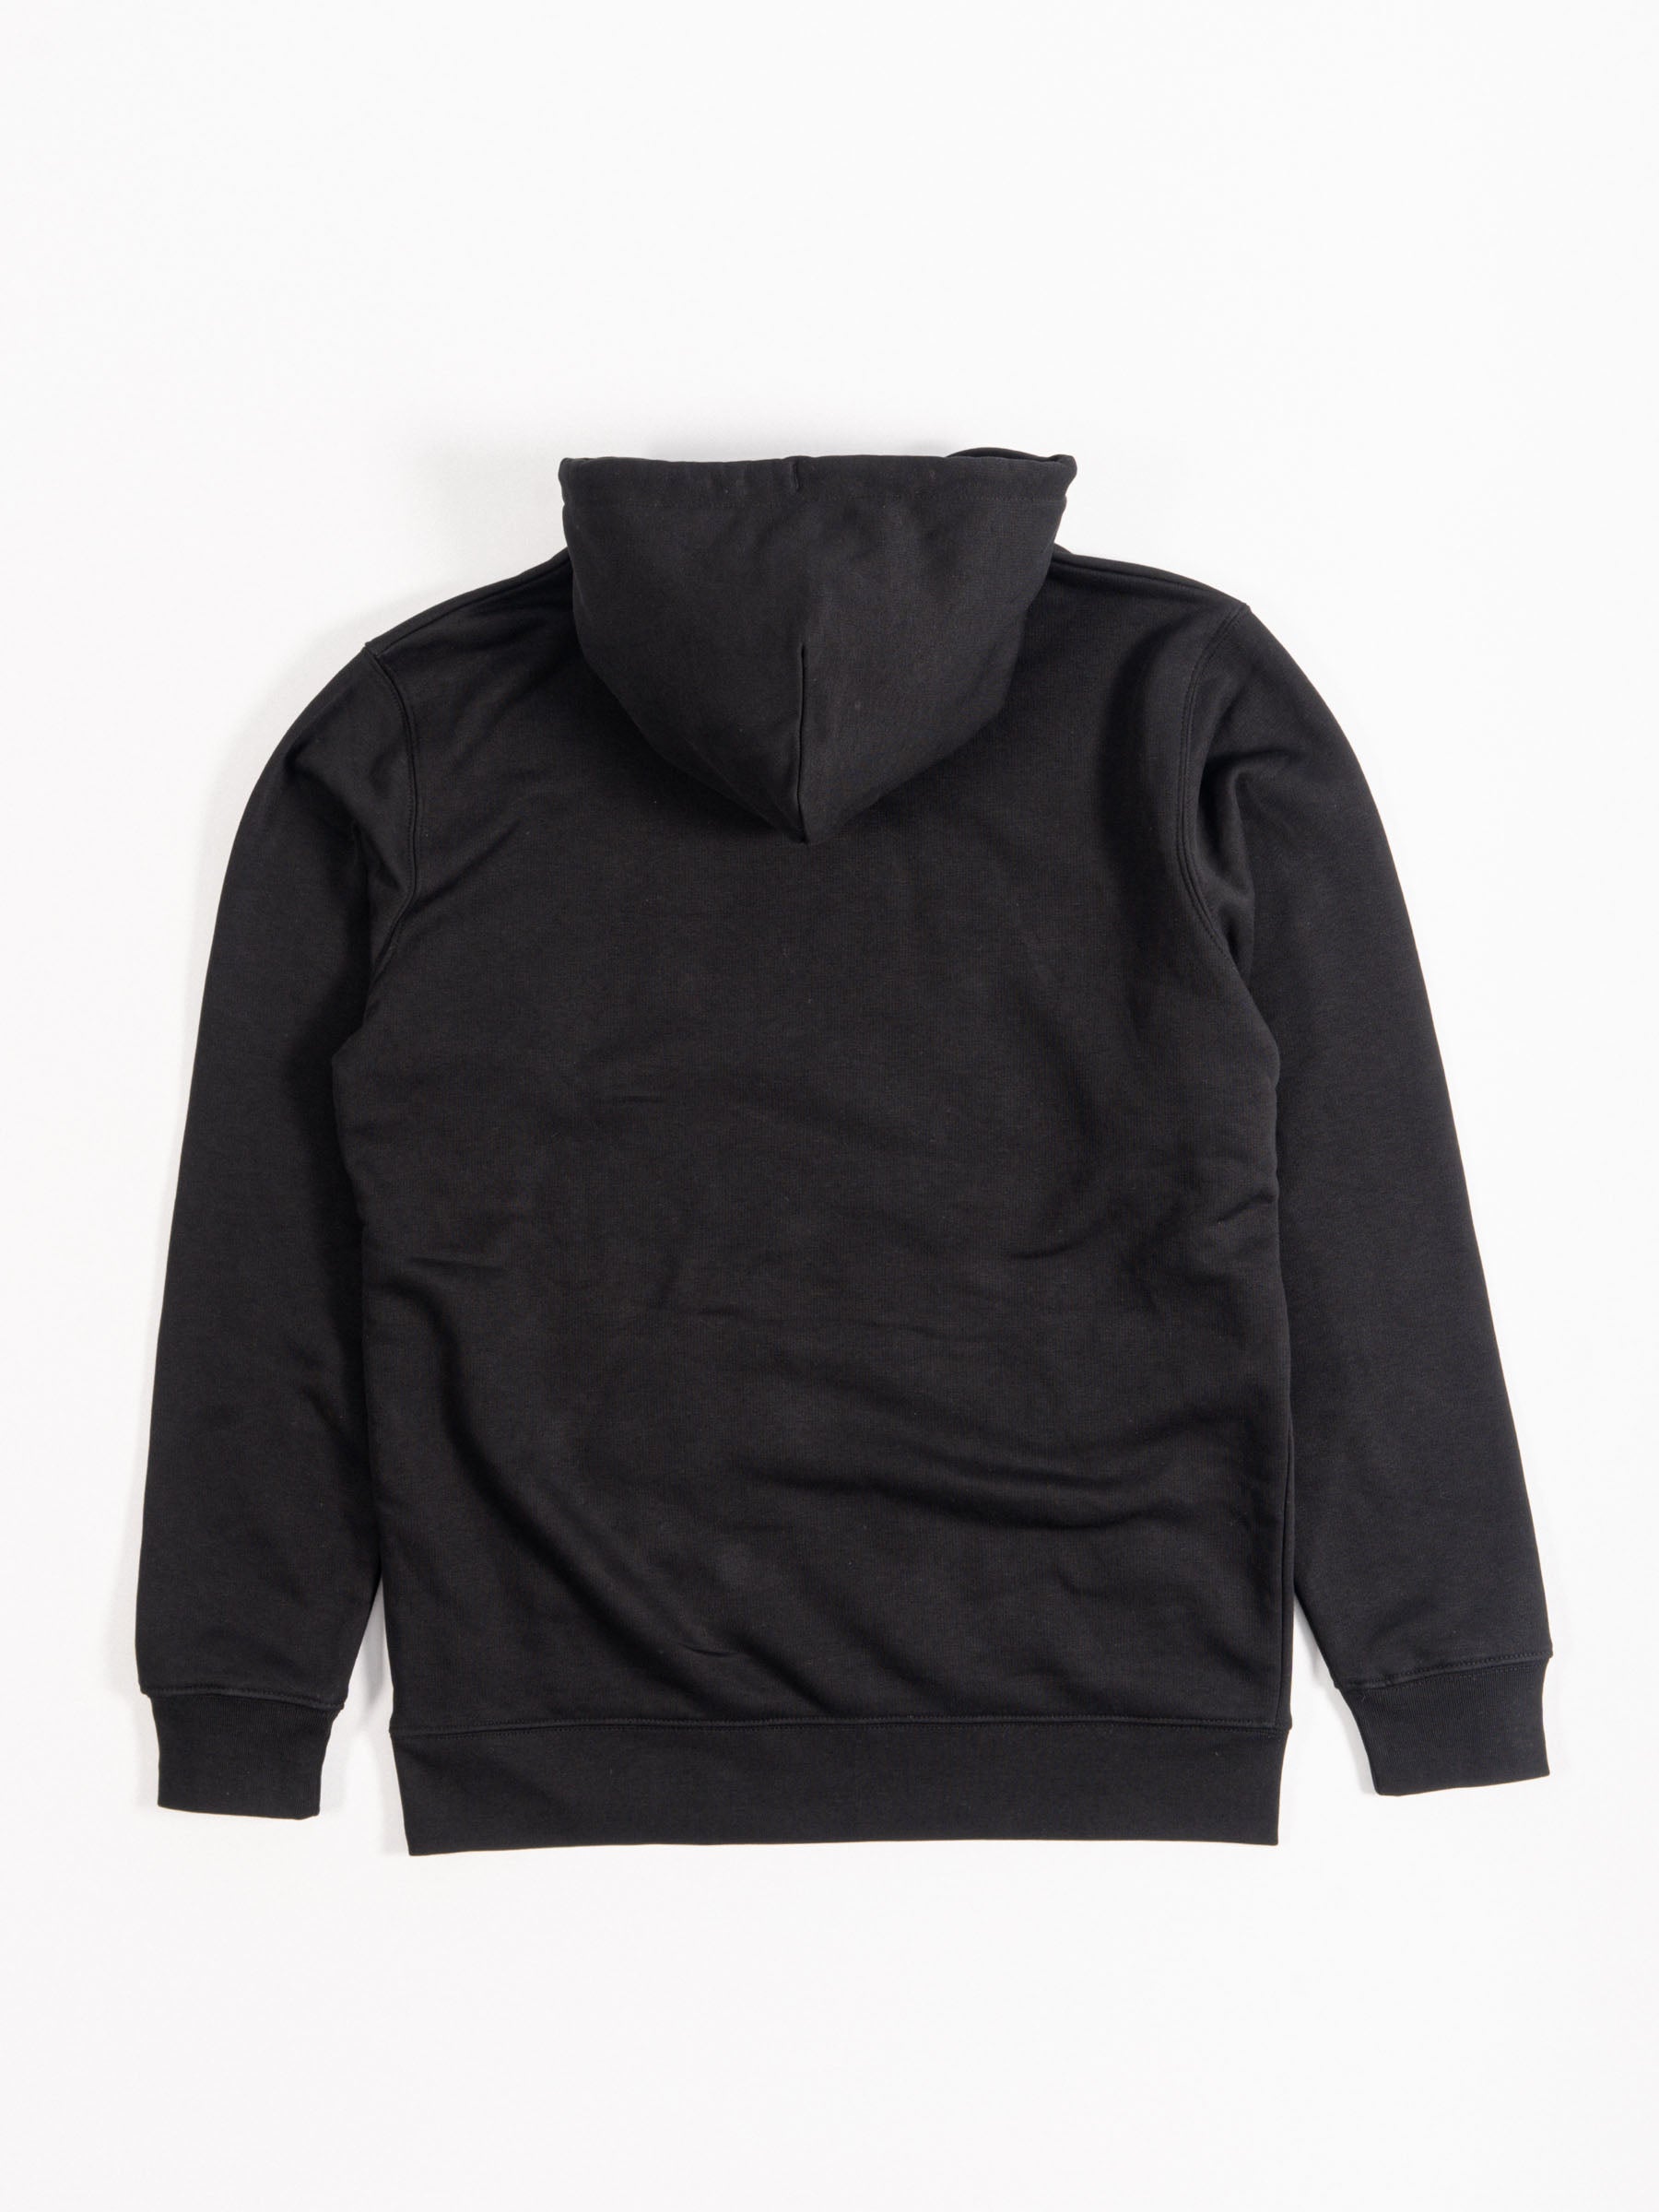 Lechaim Hooded Sweater Black